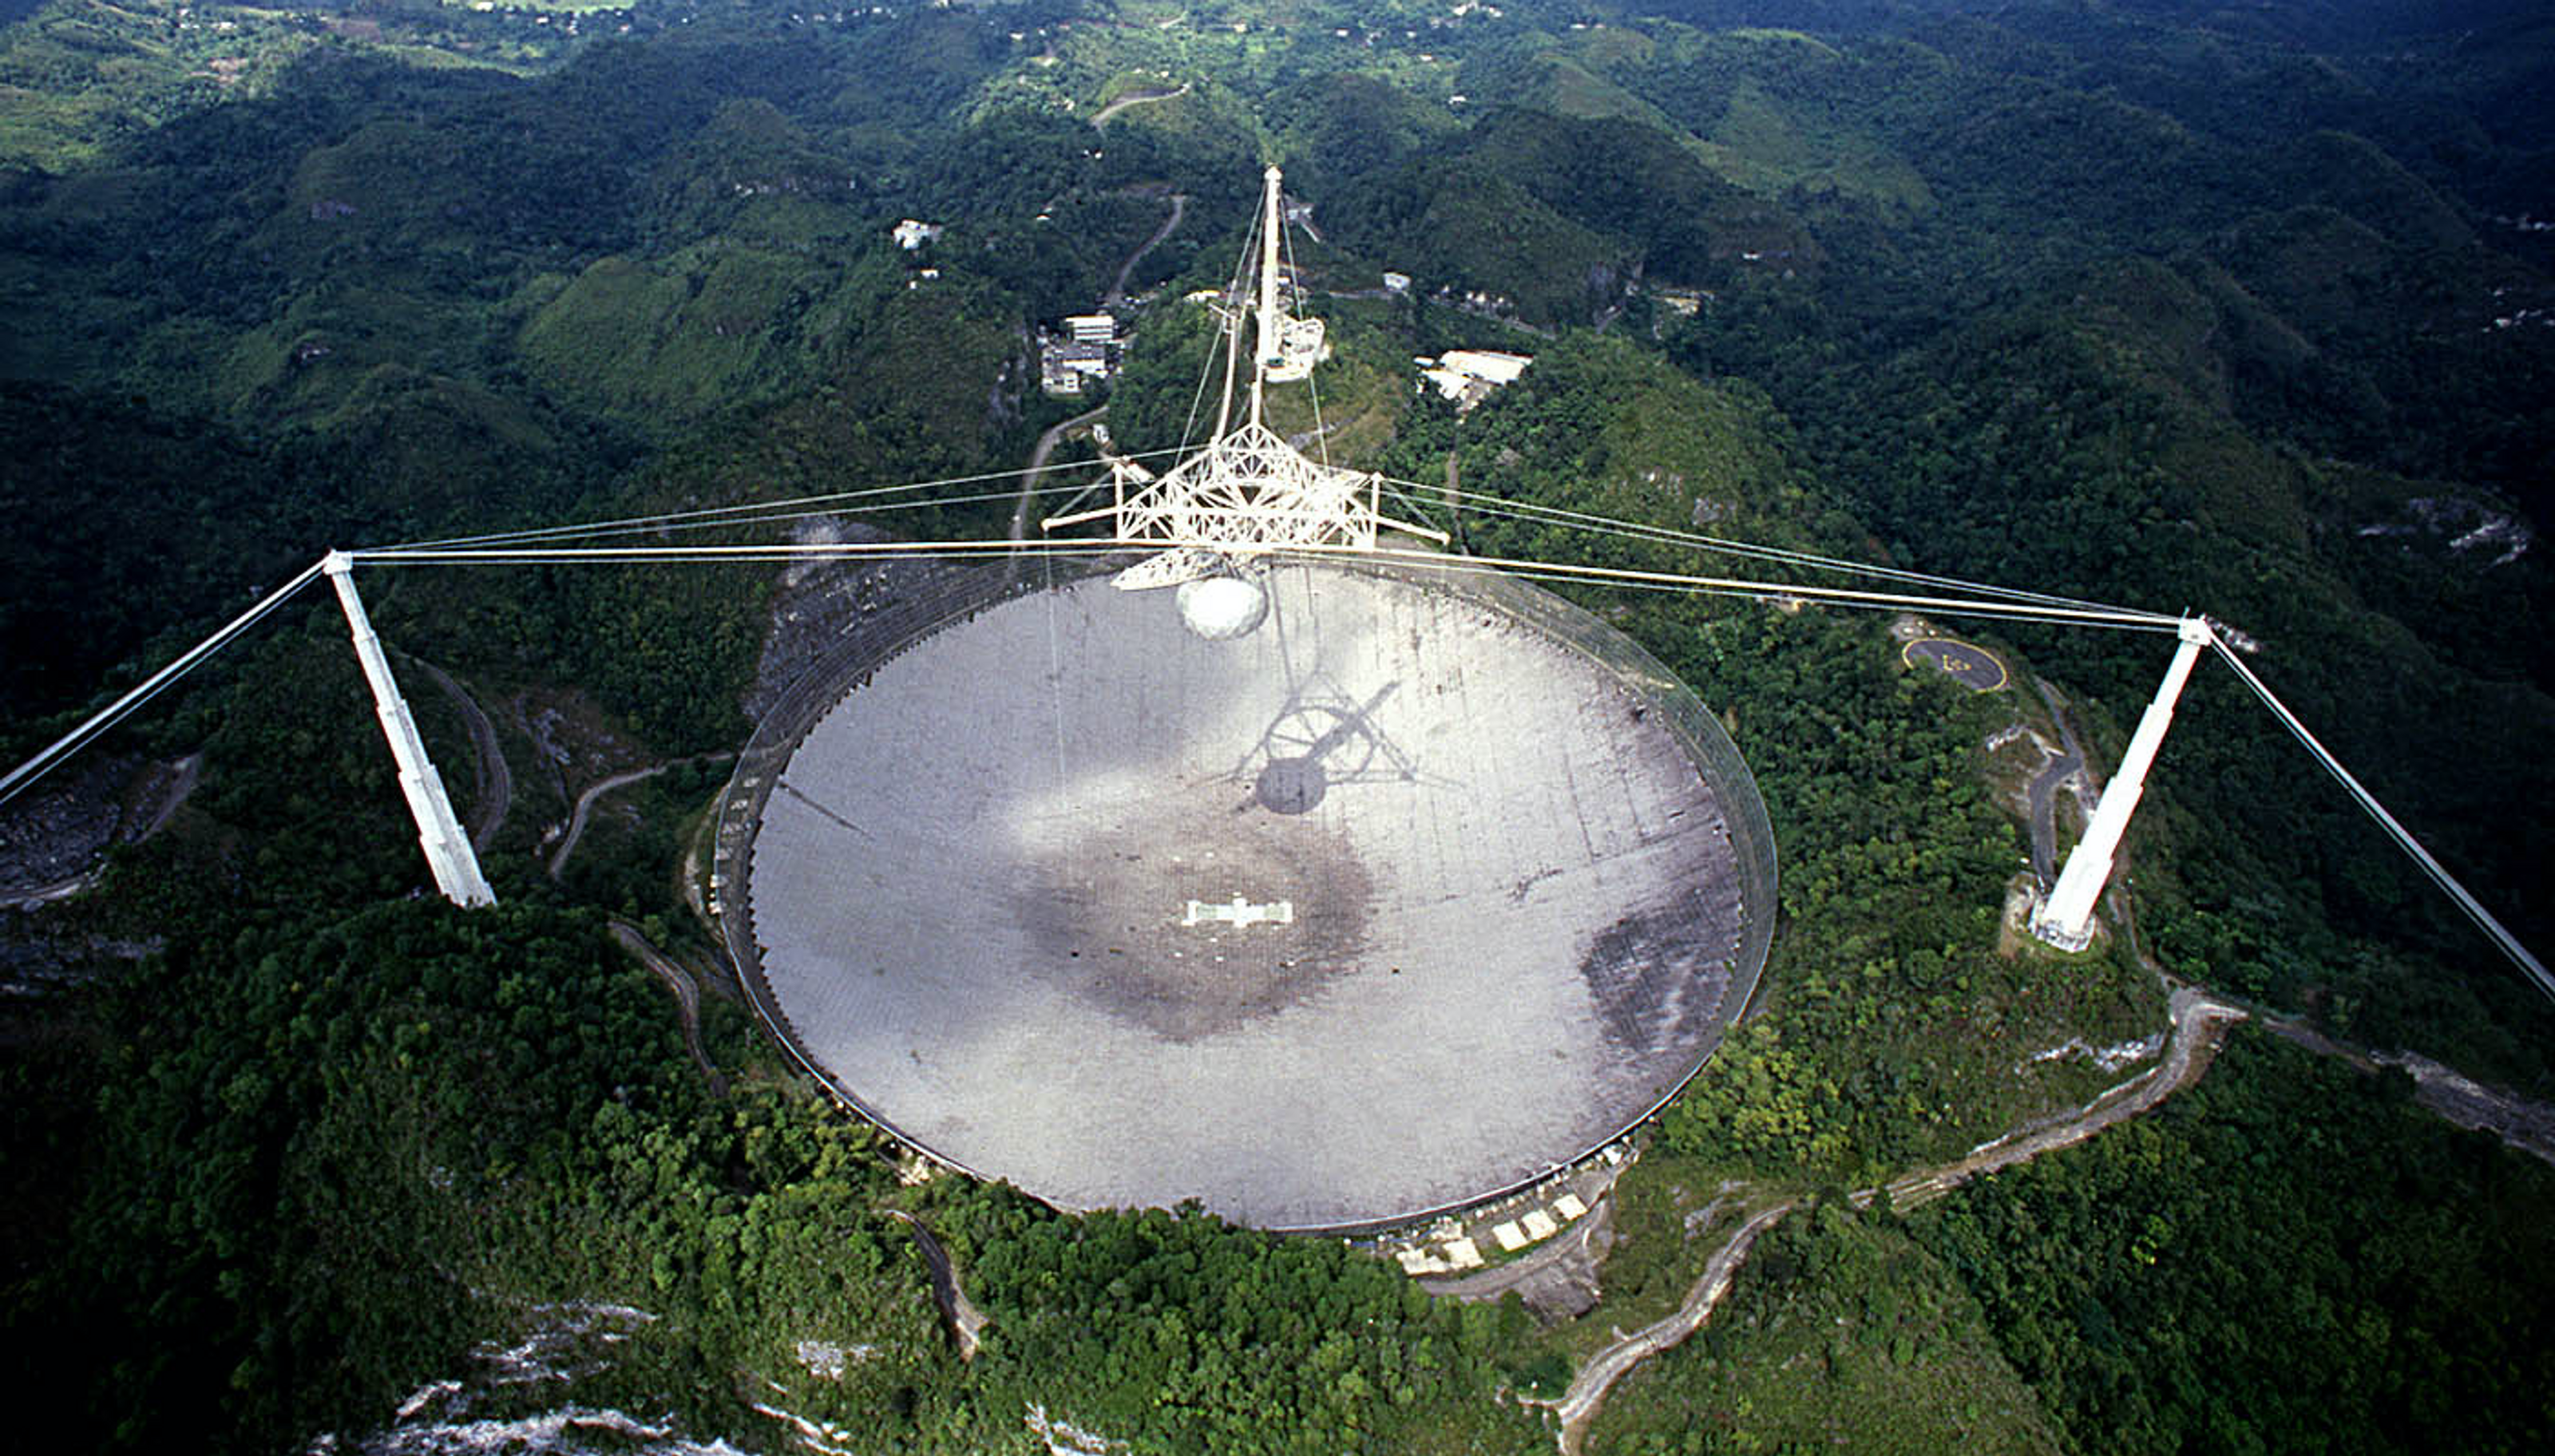 The 1,000-foot Arecibo antenna in Puerto Rico